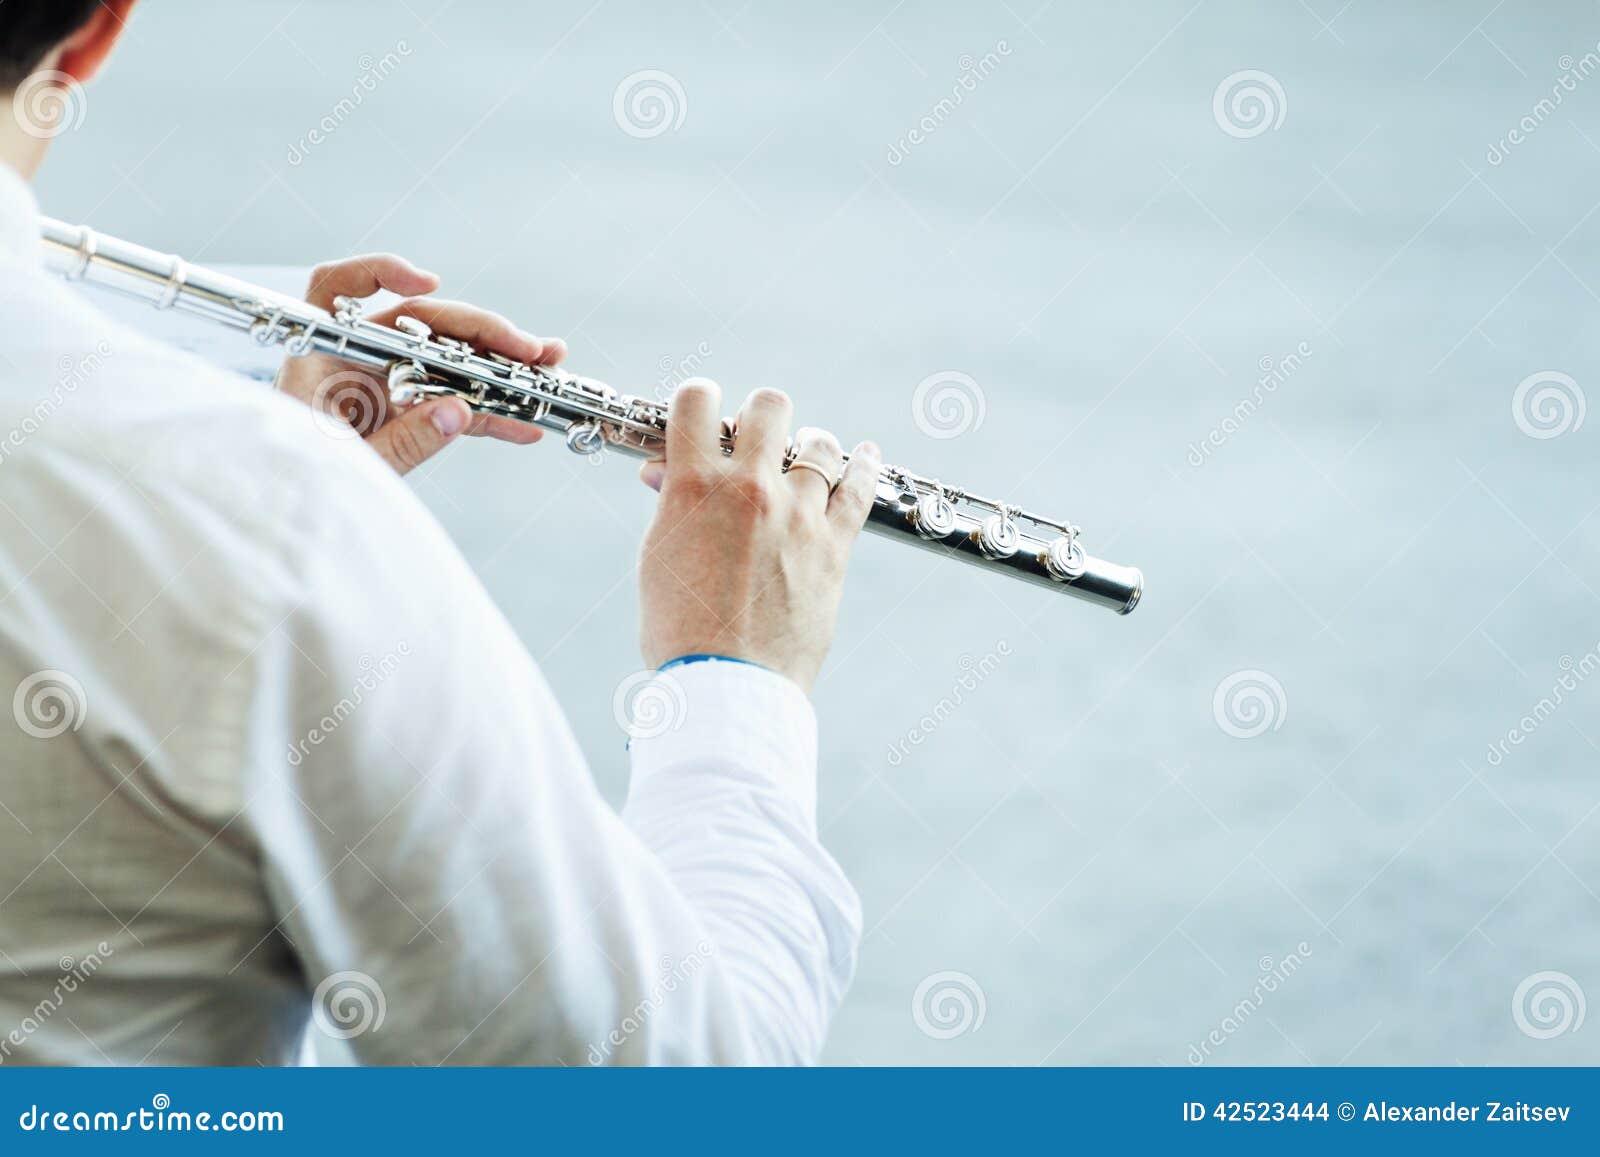 Play the flute. Музыкант с флейтой. Парень играющий на флейте. Флейта красиво. Музыканты играющие на флейте.